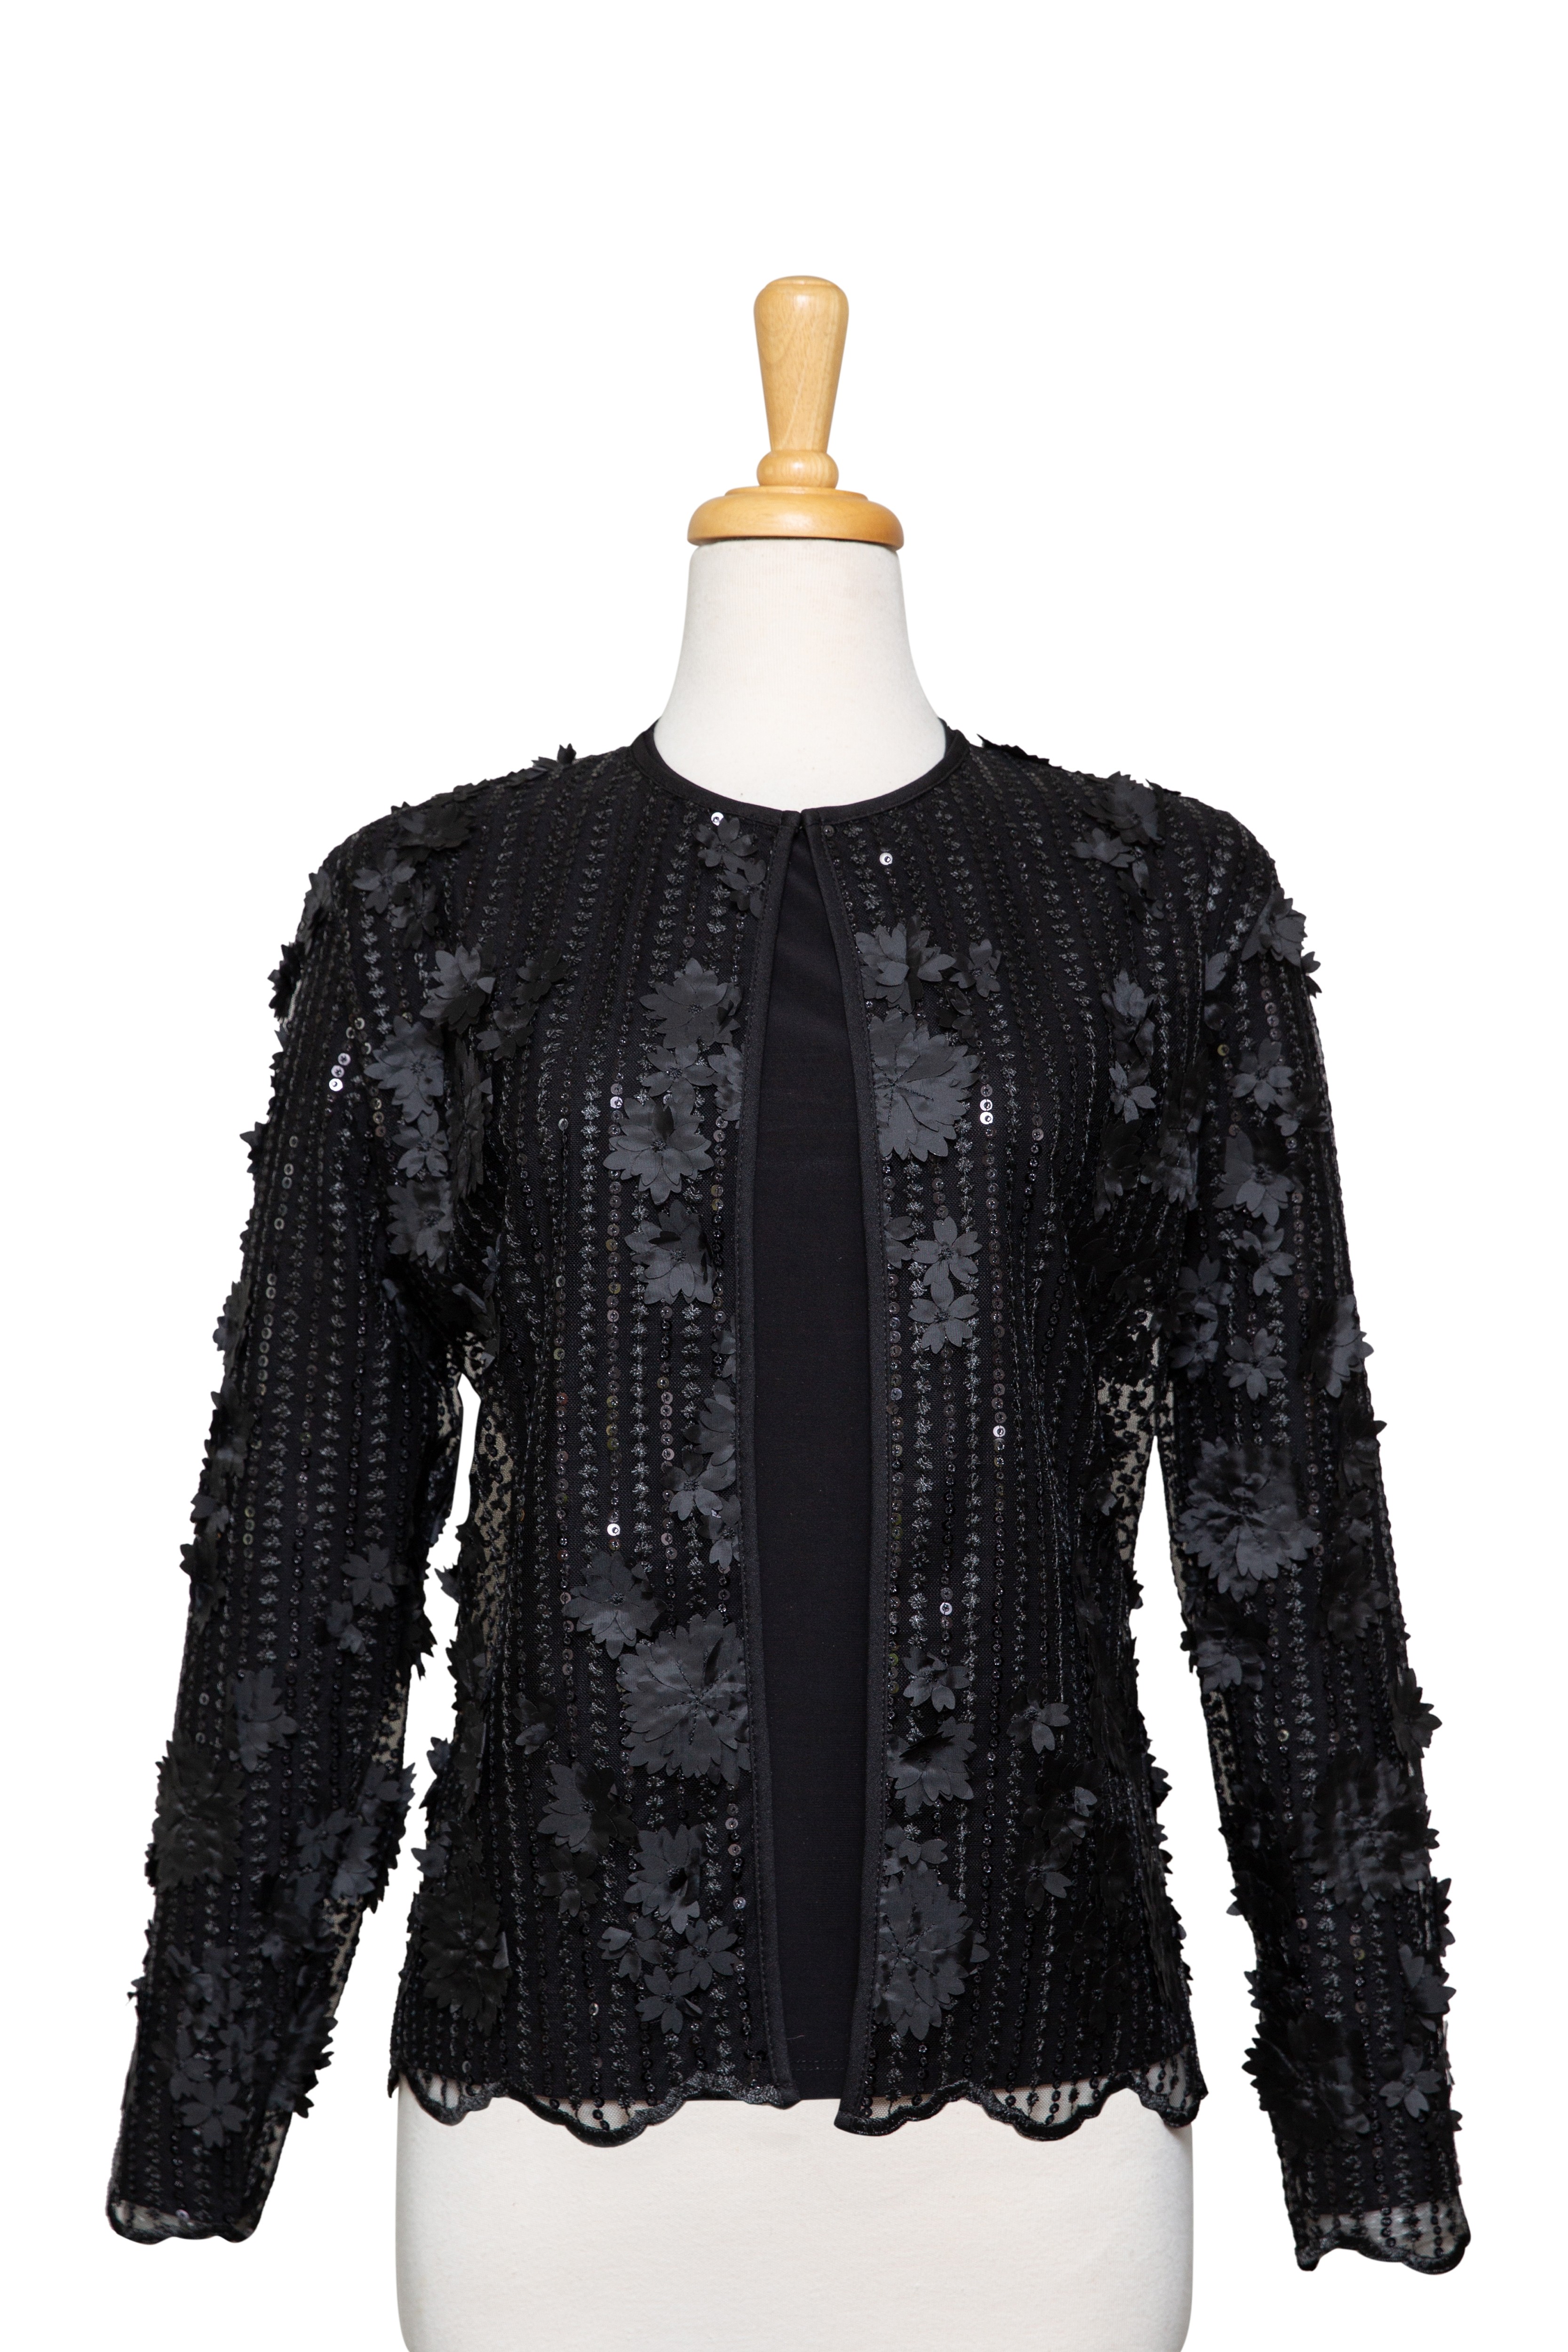 Plus Size Two Piece Black 3D Floral Sequins Lace Jacket With Black Long Sleeve Top